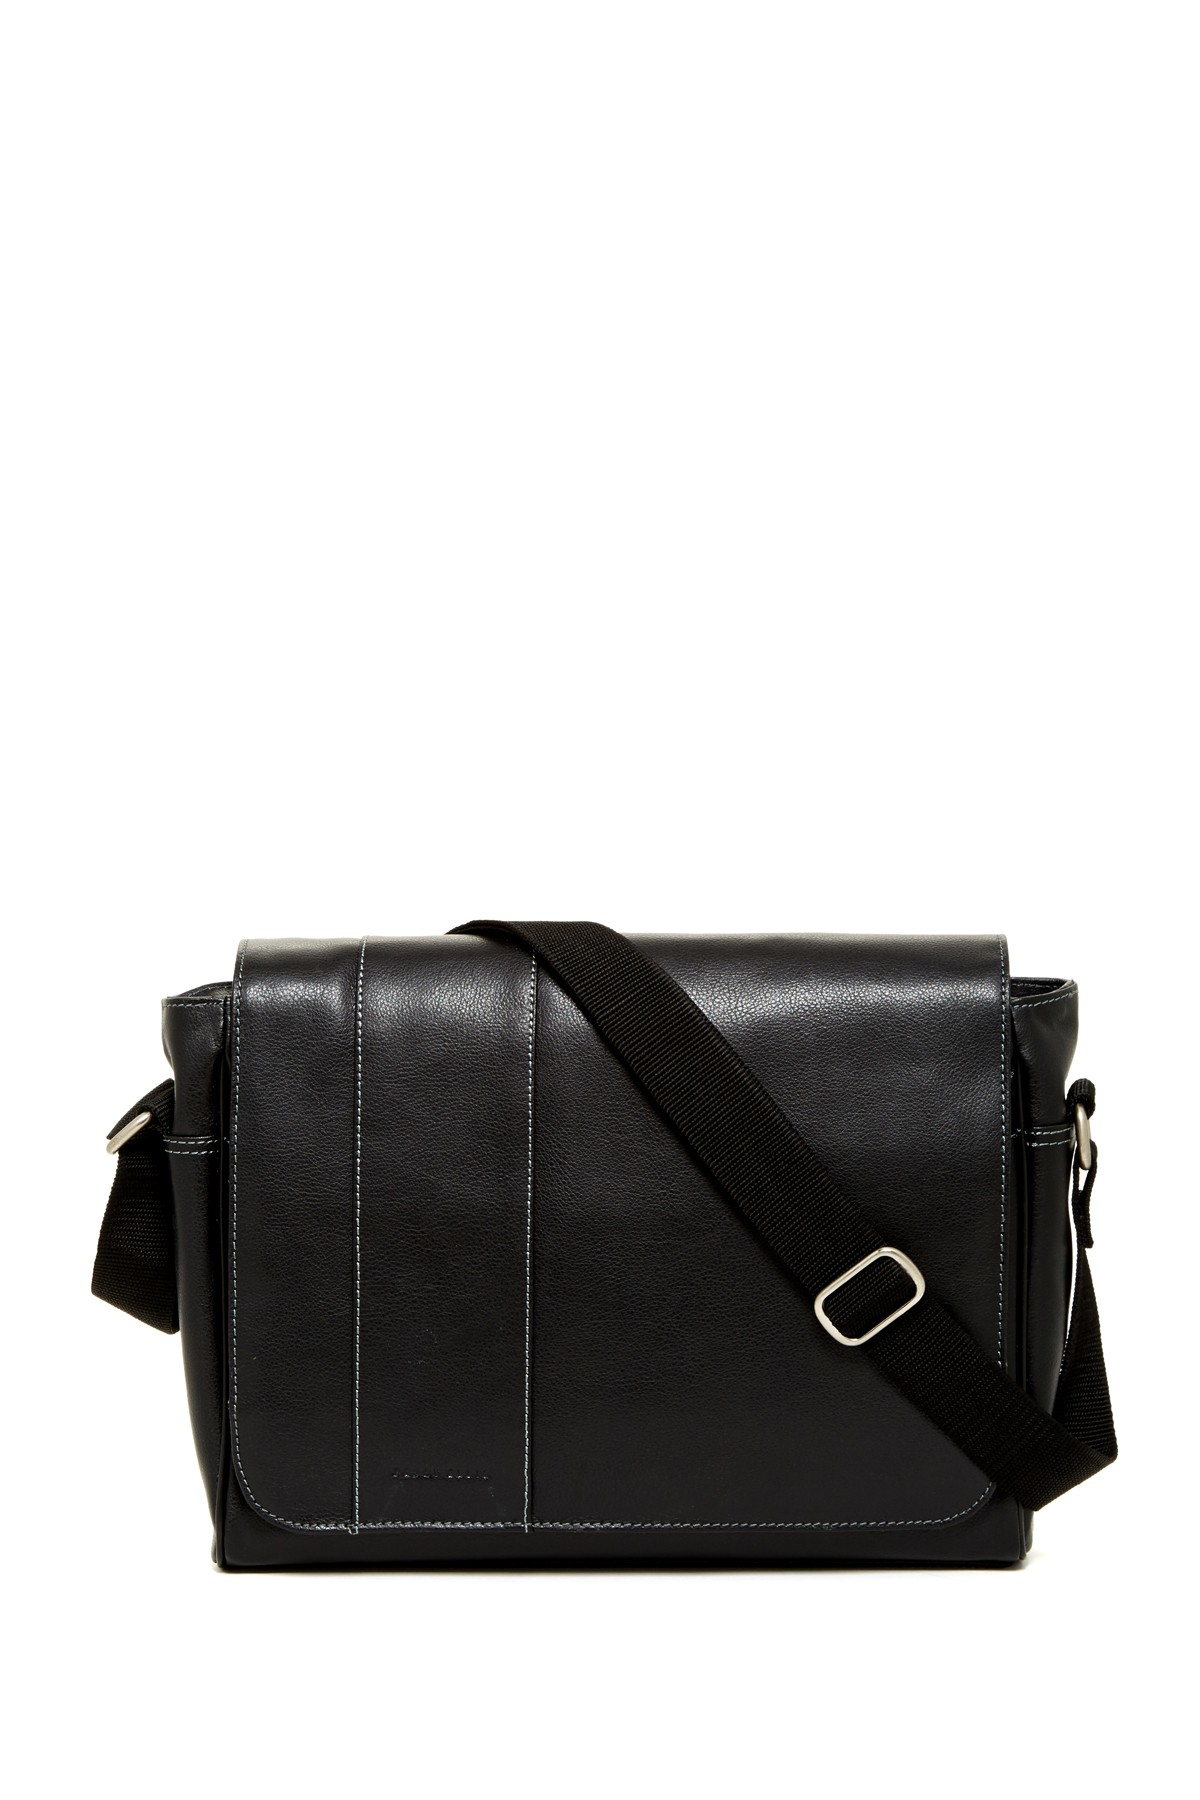 Lyst - Perry Ellis Leather Messenger Bag in Black for Men